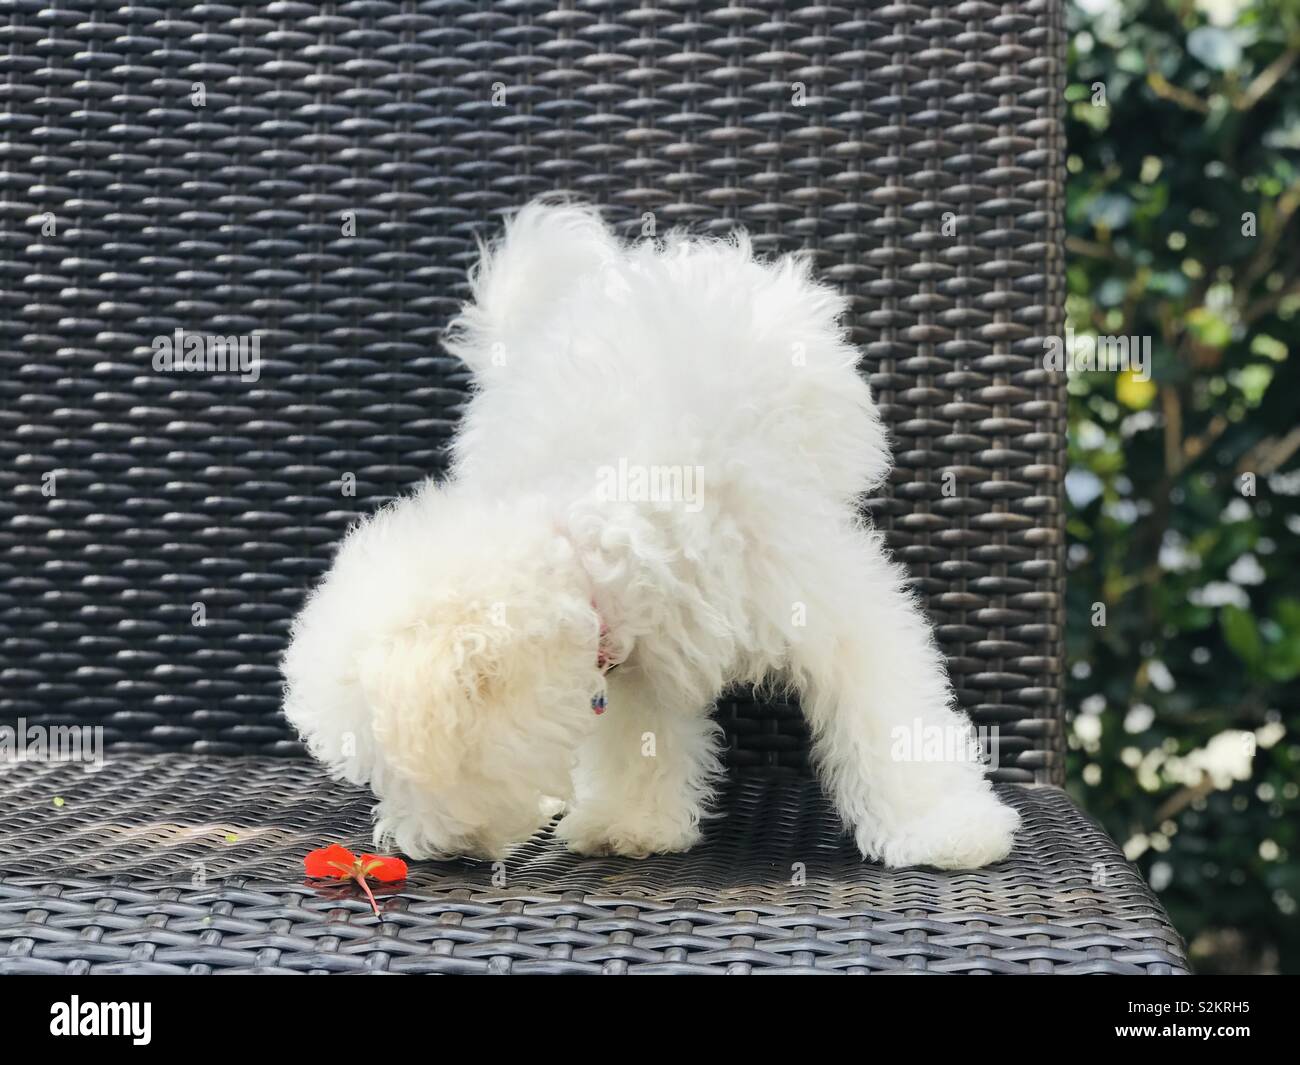 Furry white puppy sniffing little bright red flower on dark outdoor chair in leafy garden. Stock Photo